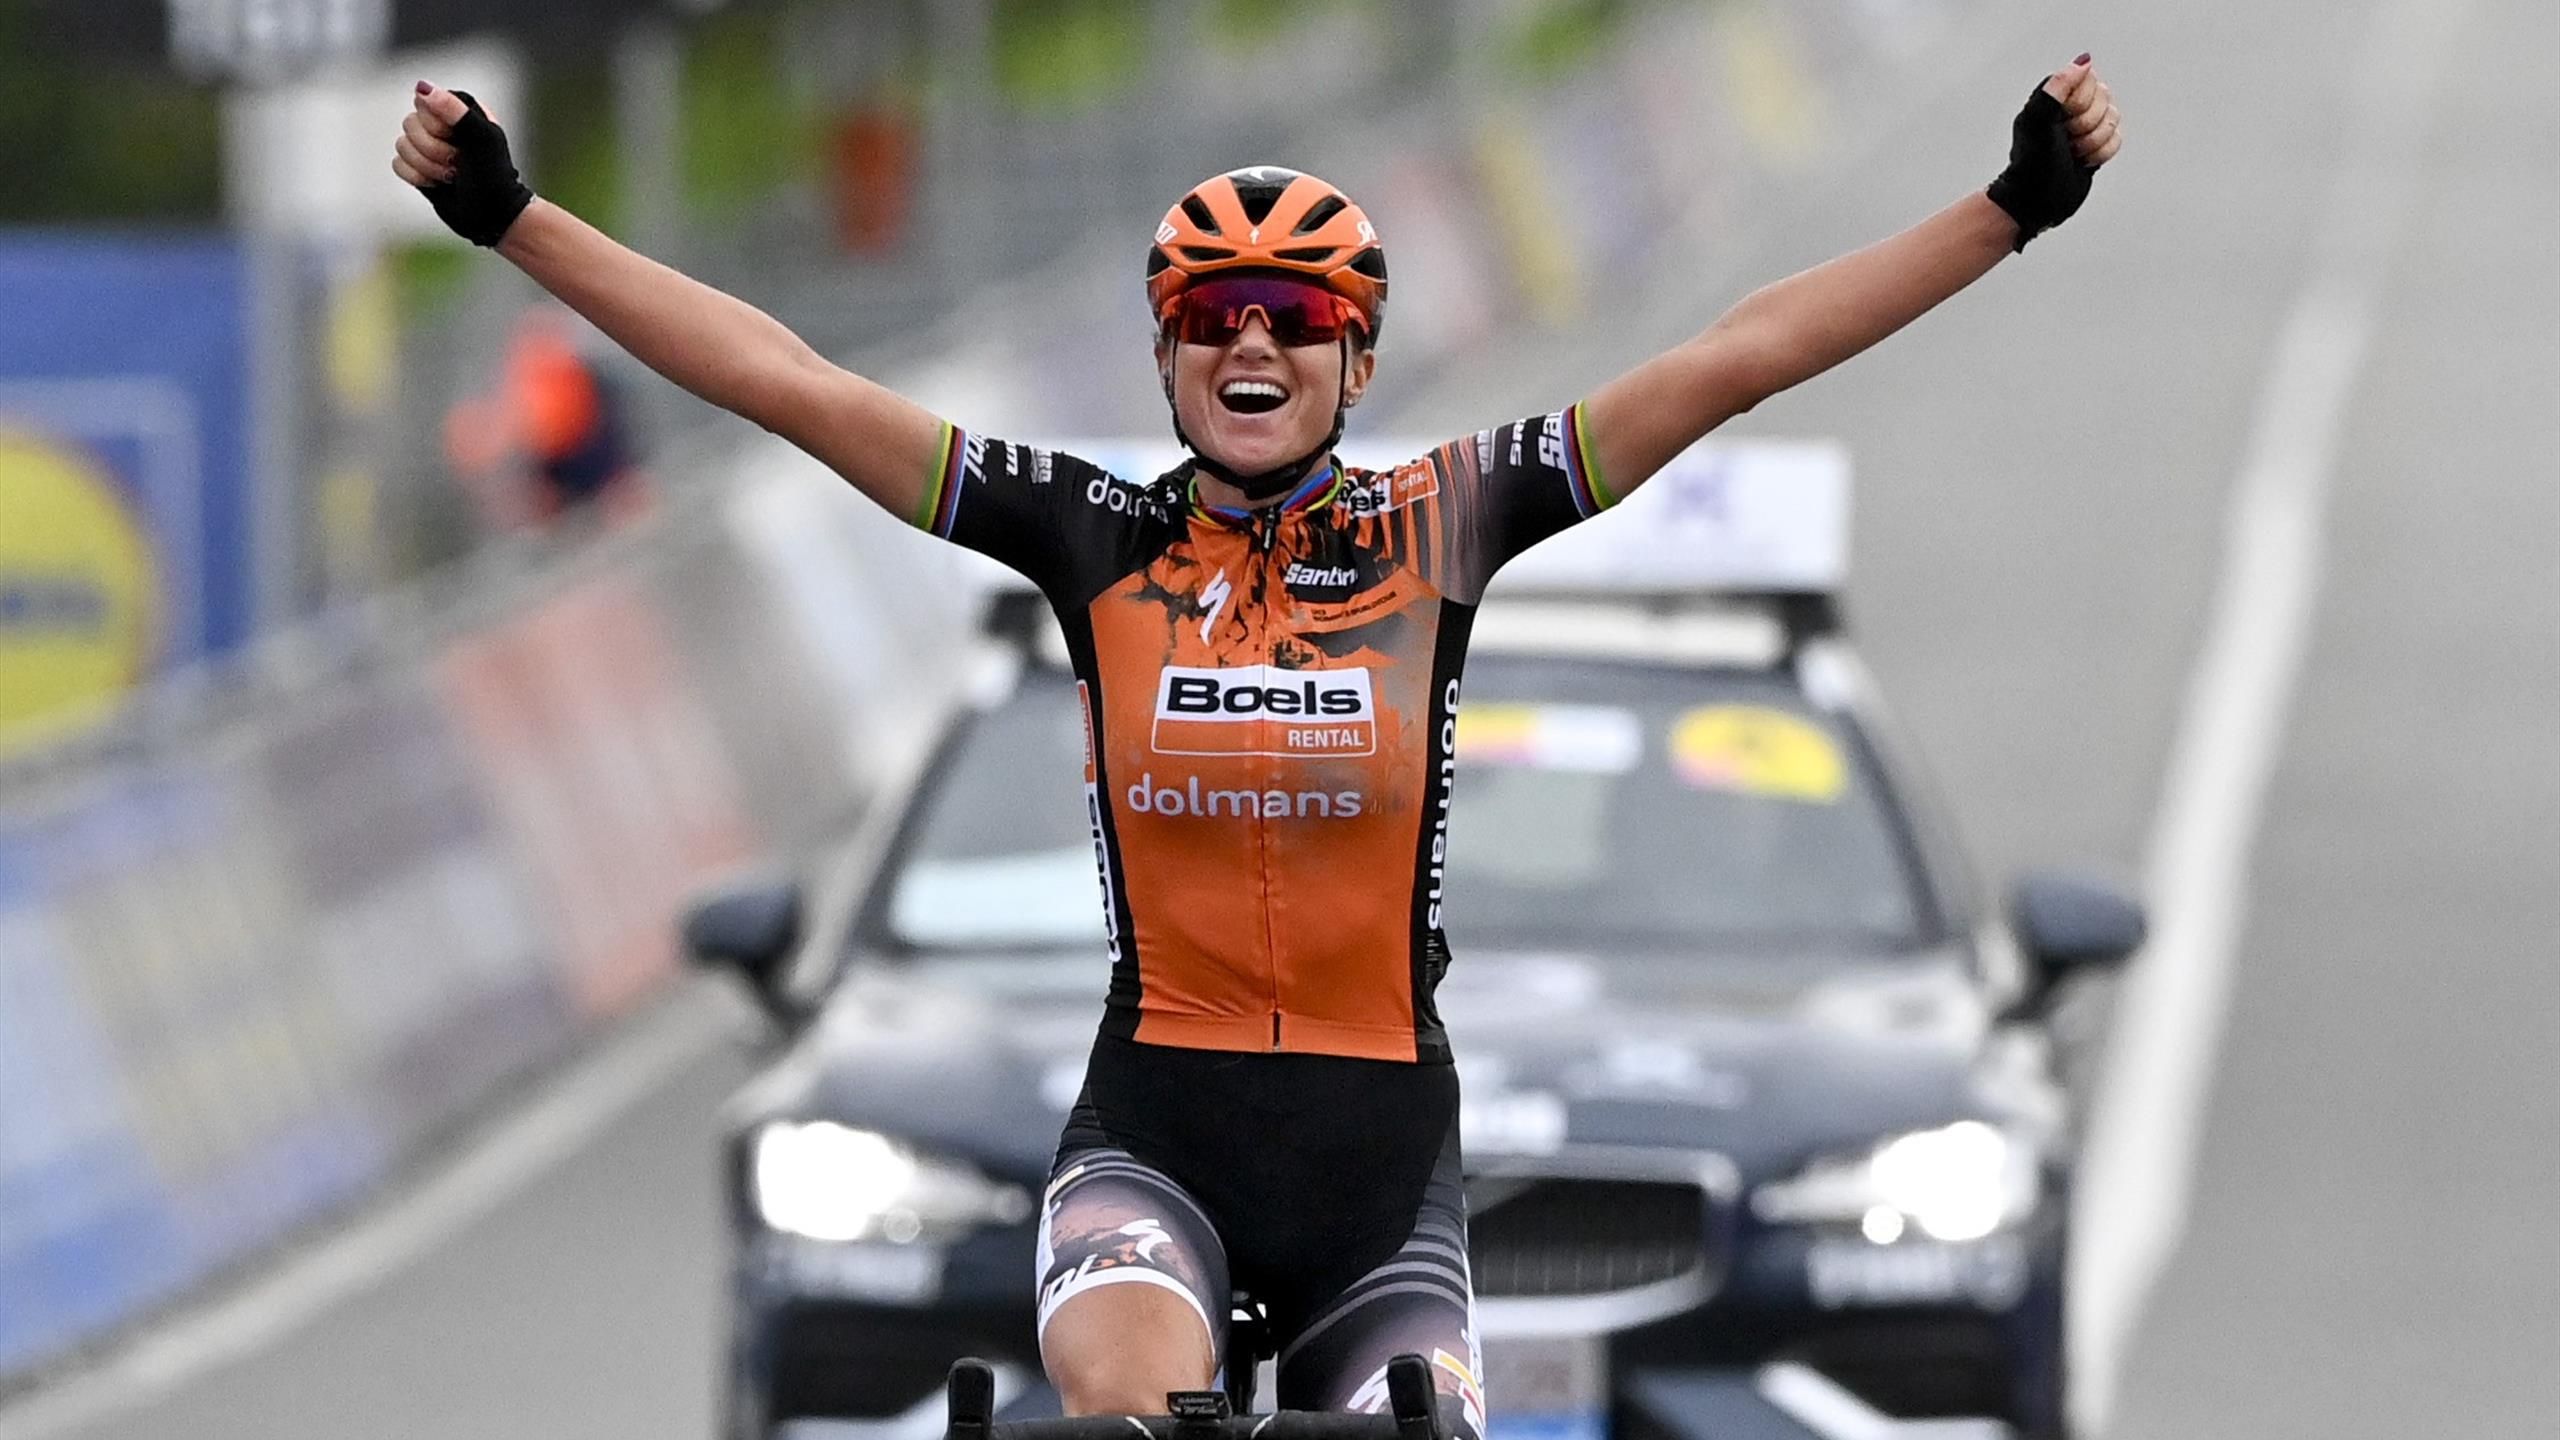 Tour of Flanders cycling 2021 womens race live - Annemiek van Vleuten and Marianne Vos in action